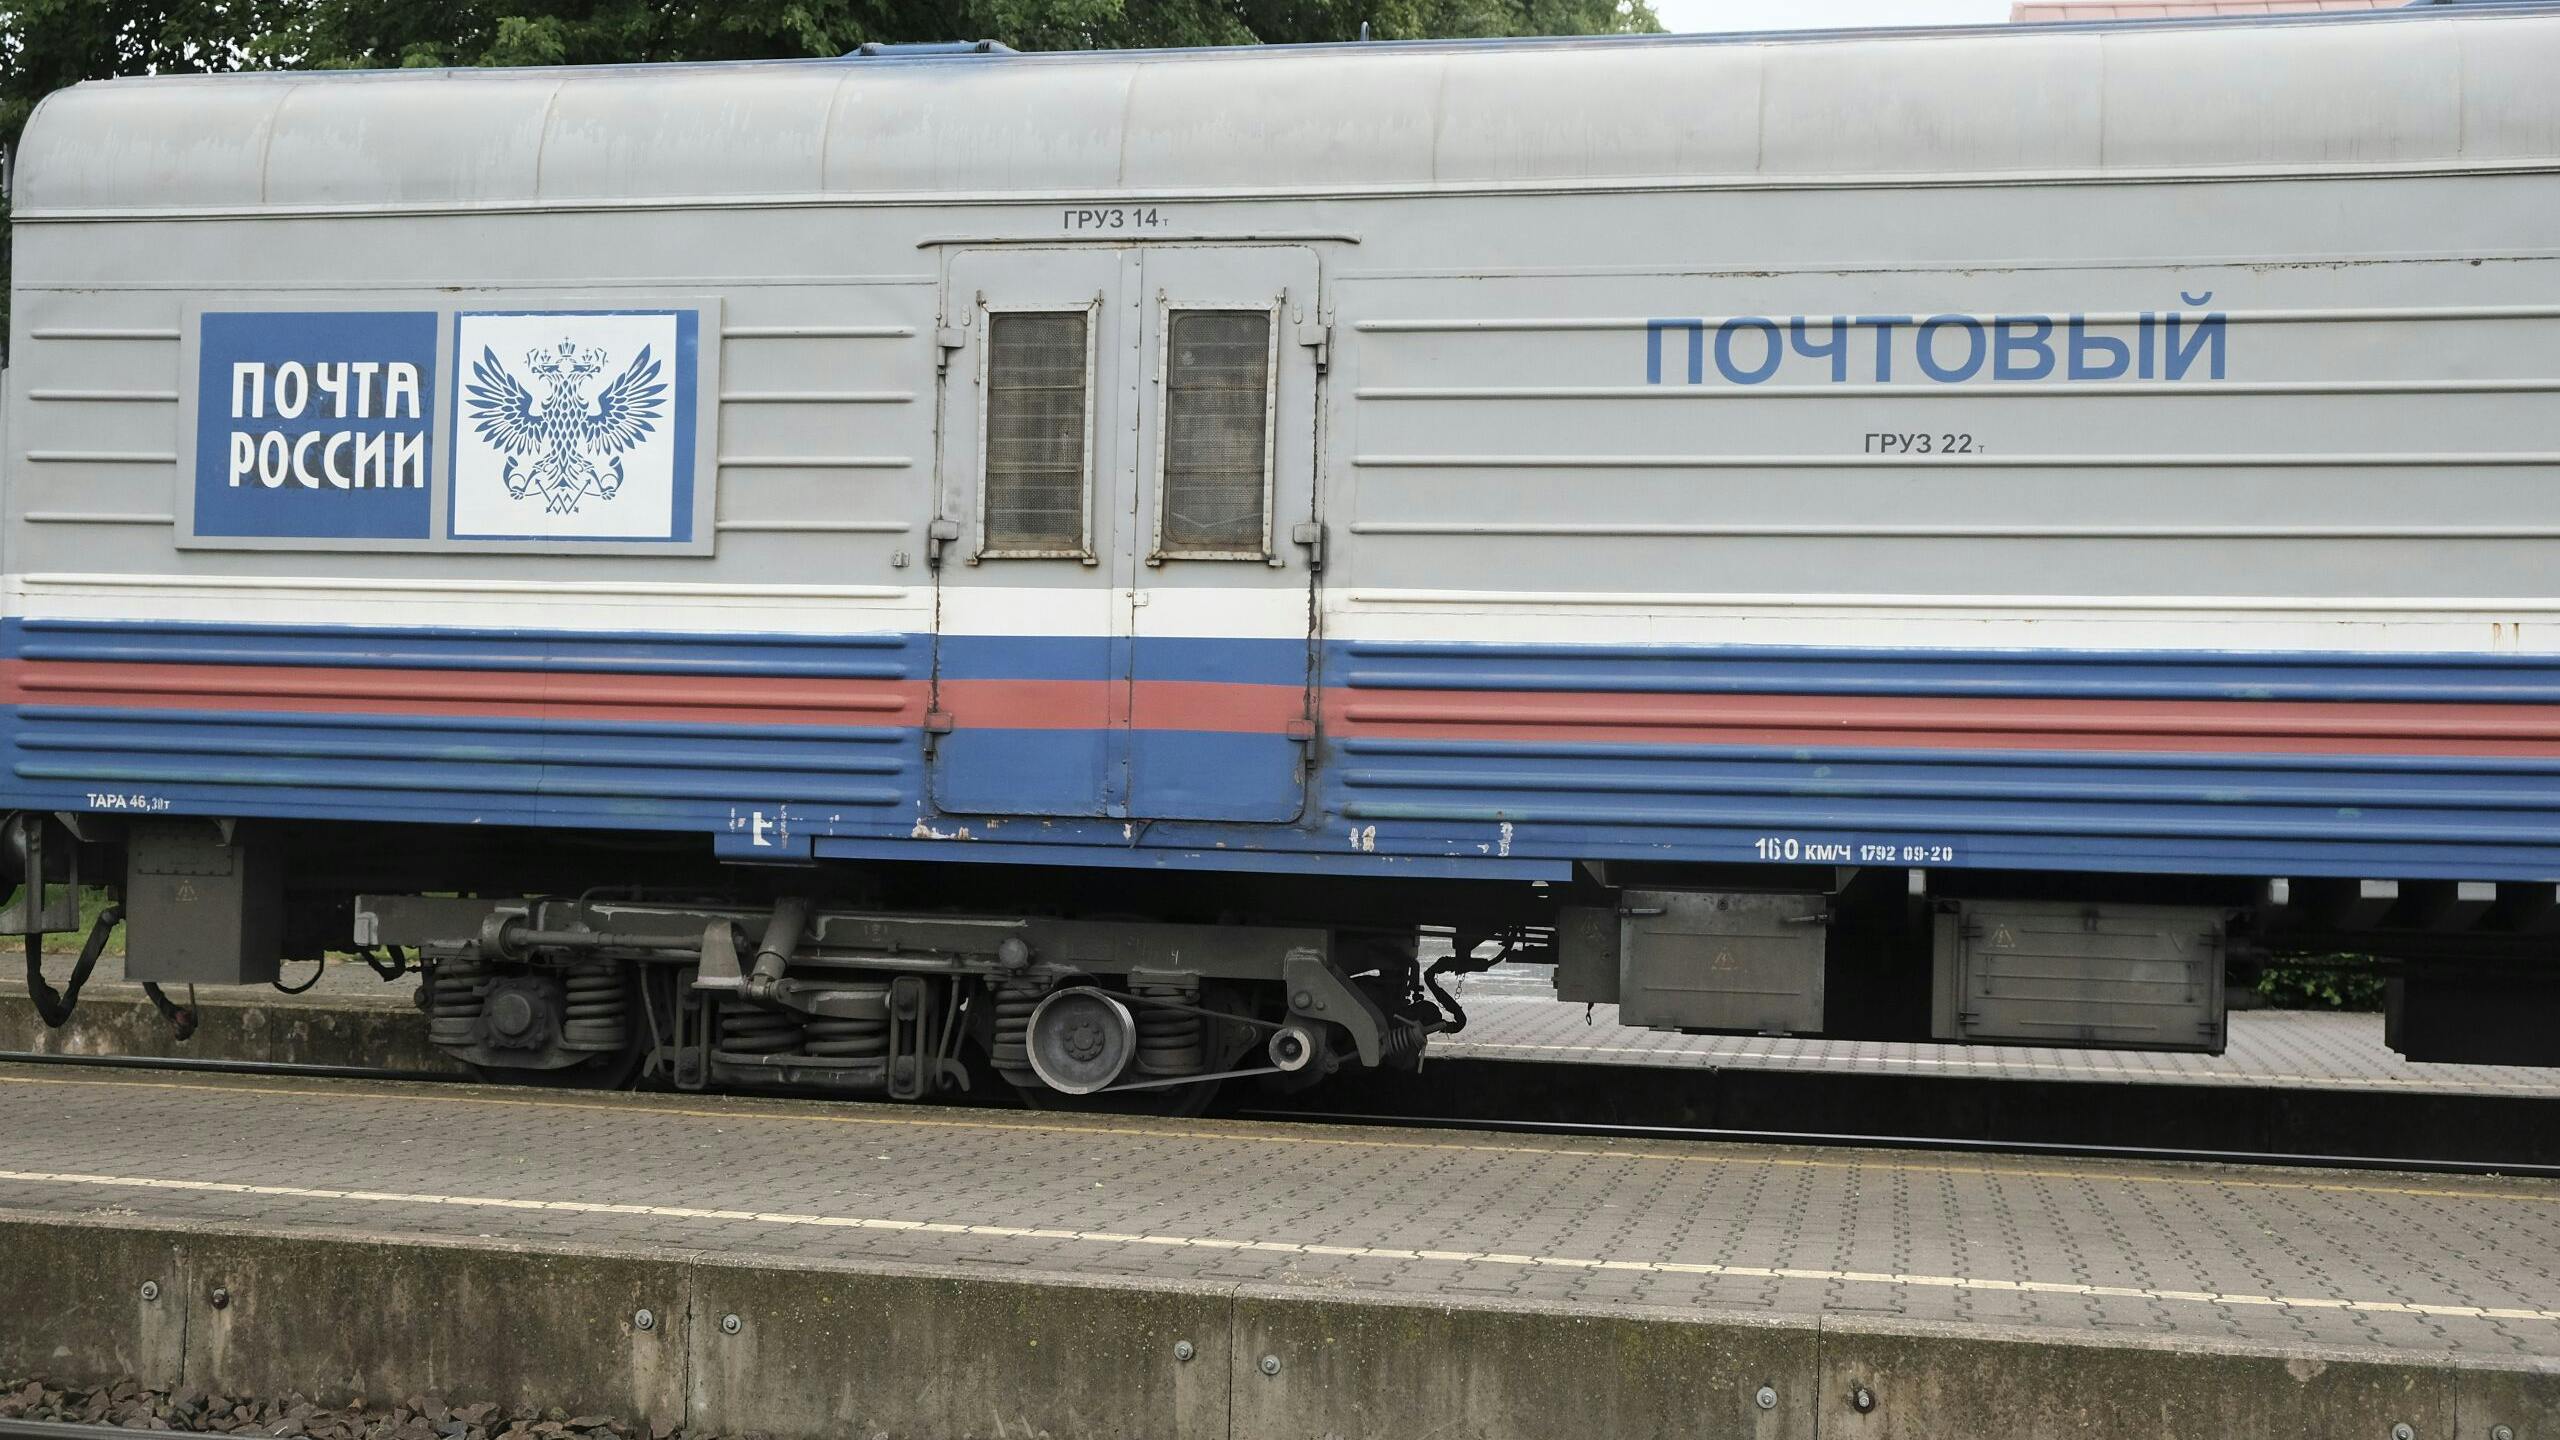 Russische trein arriveert op station Kybartai, tussen Kaliningrad en Litouwen